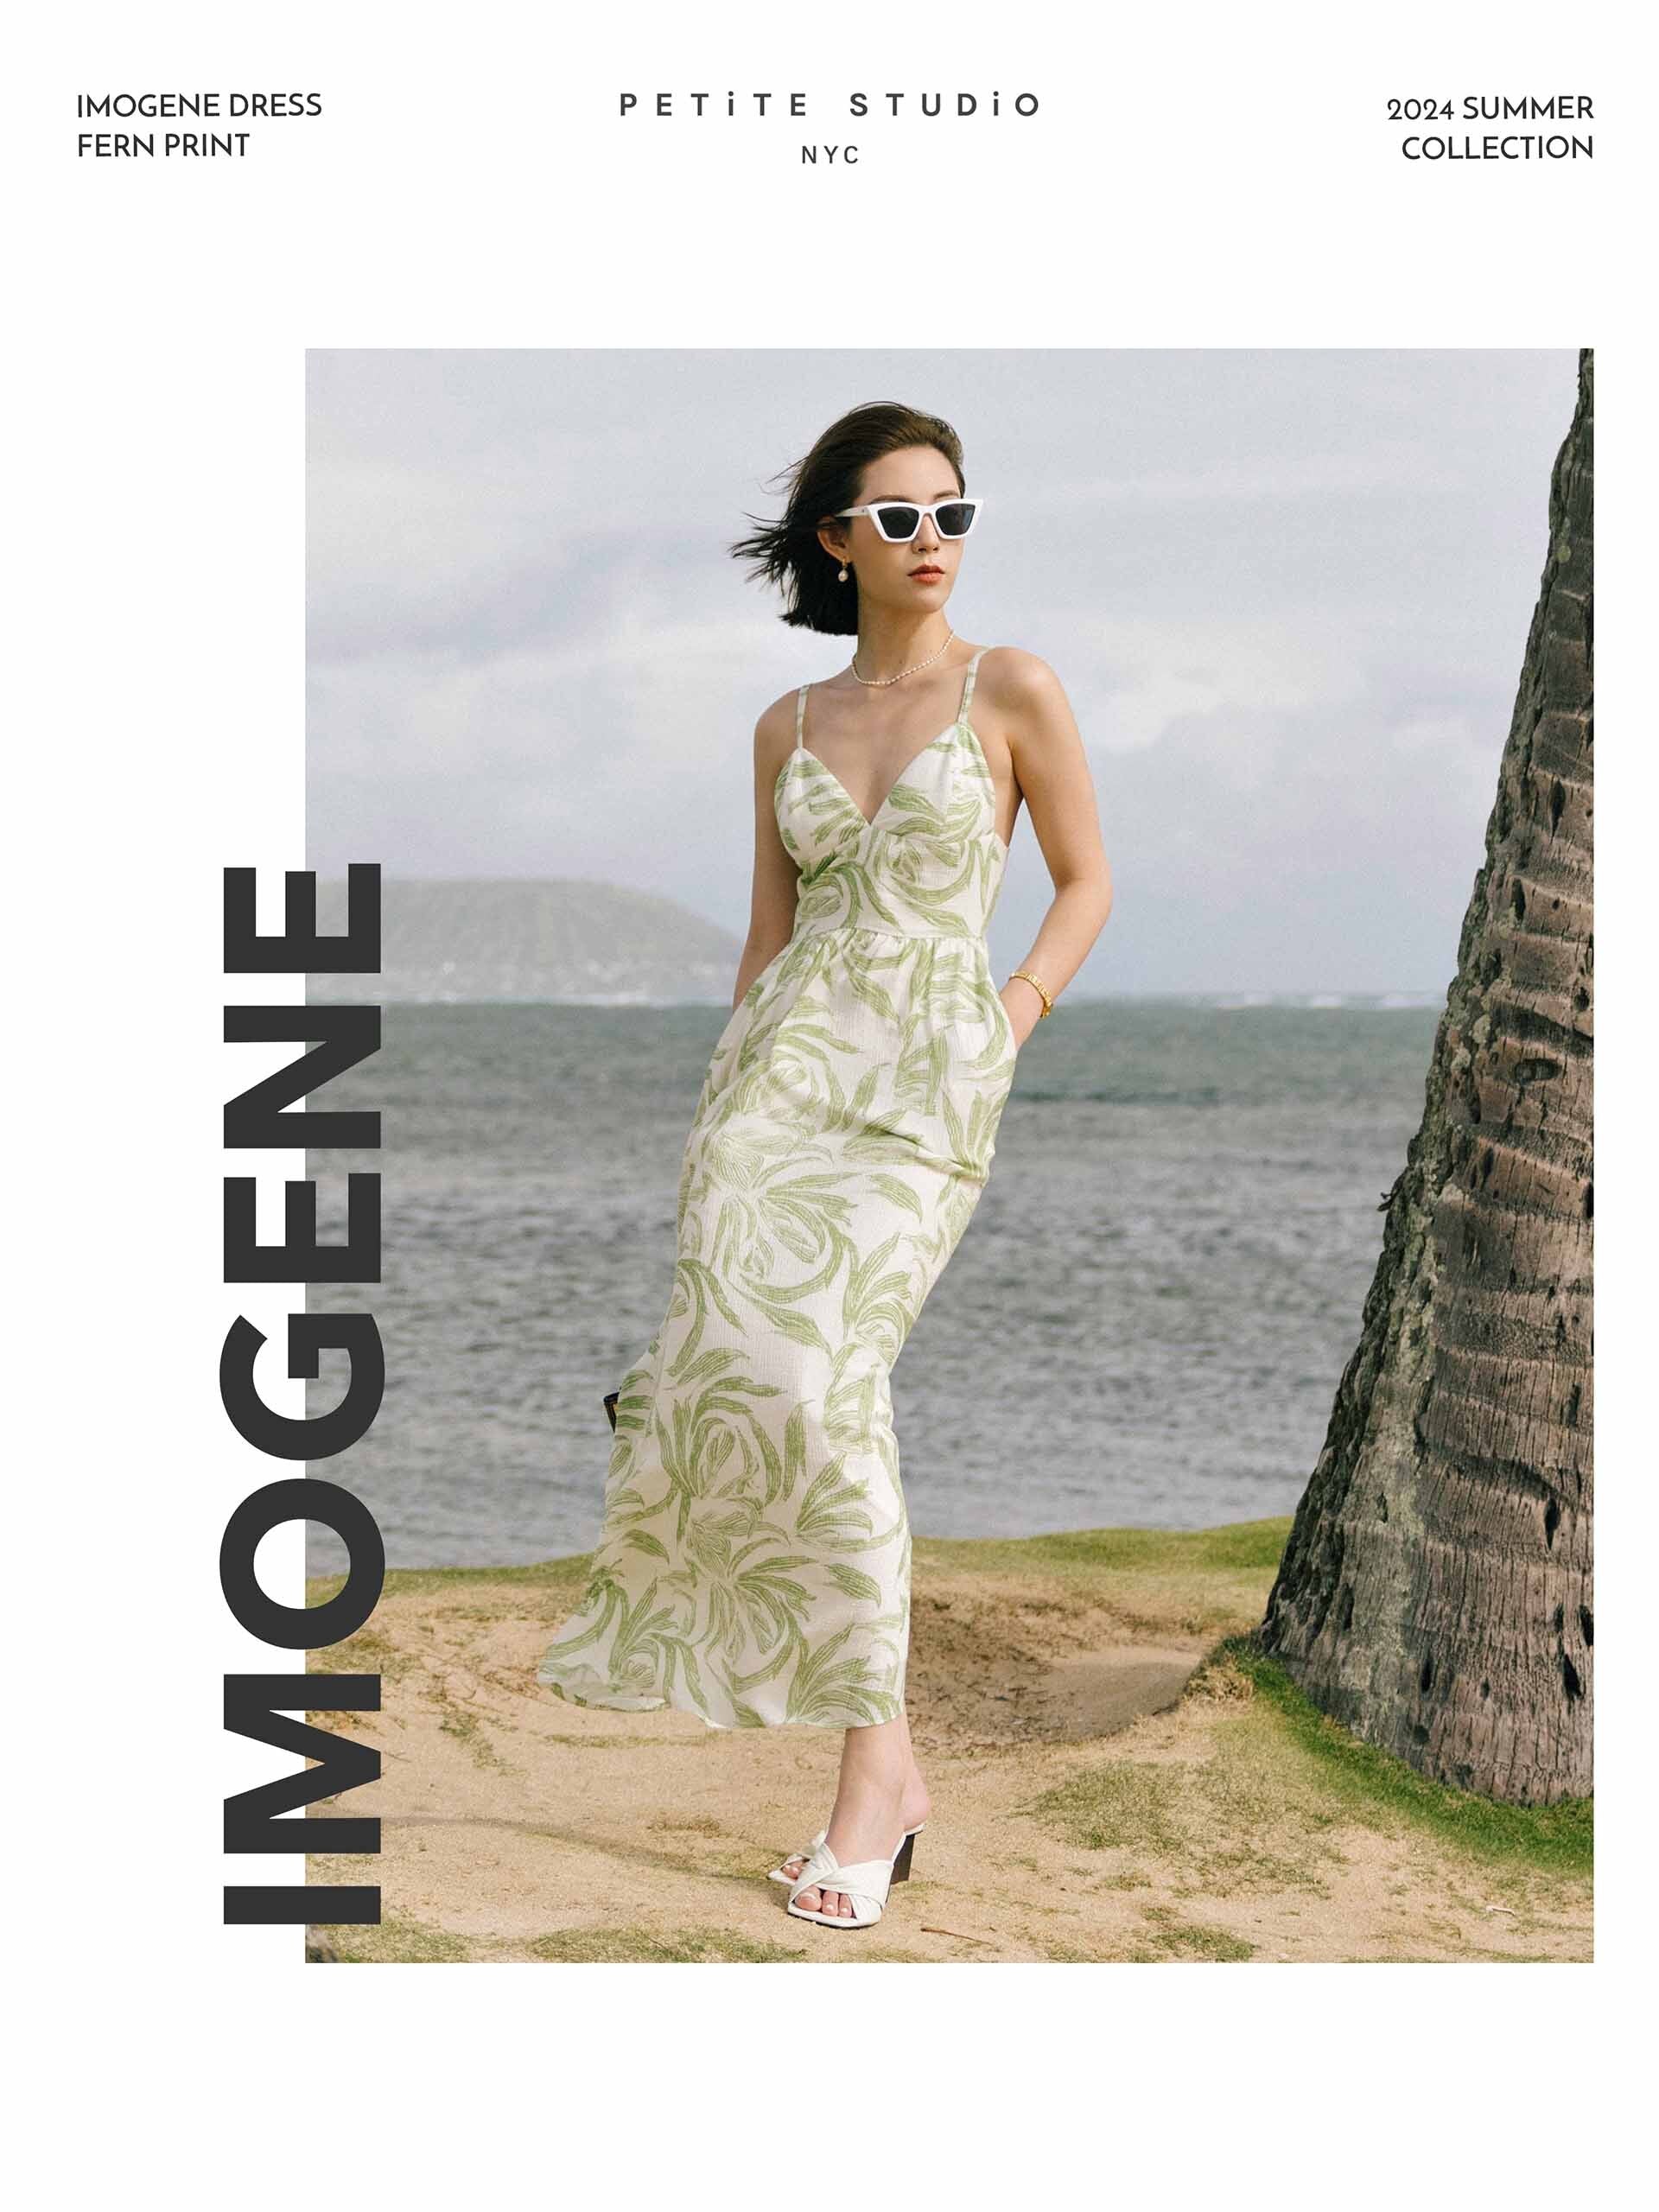 Petite Studio NYC | Suggyl x Petite Studio Summer '24 Collection - Suggyl Series. Imogene Dress in Fern Print